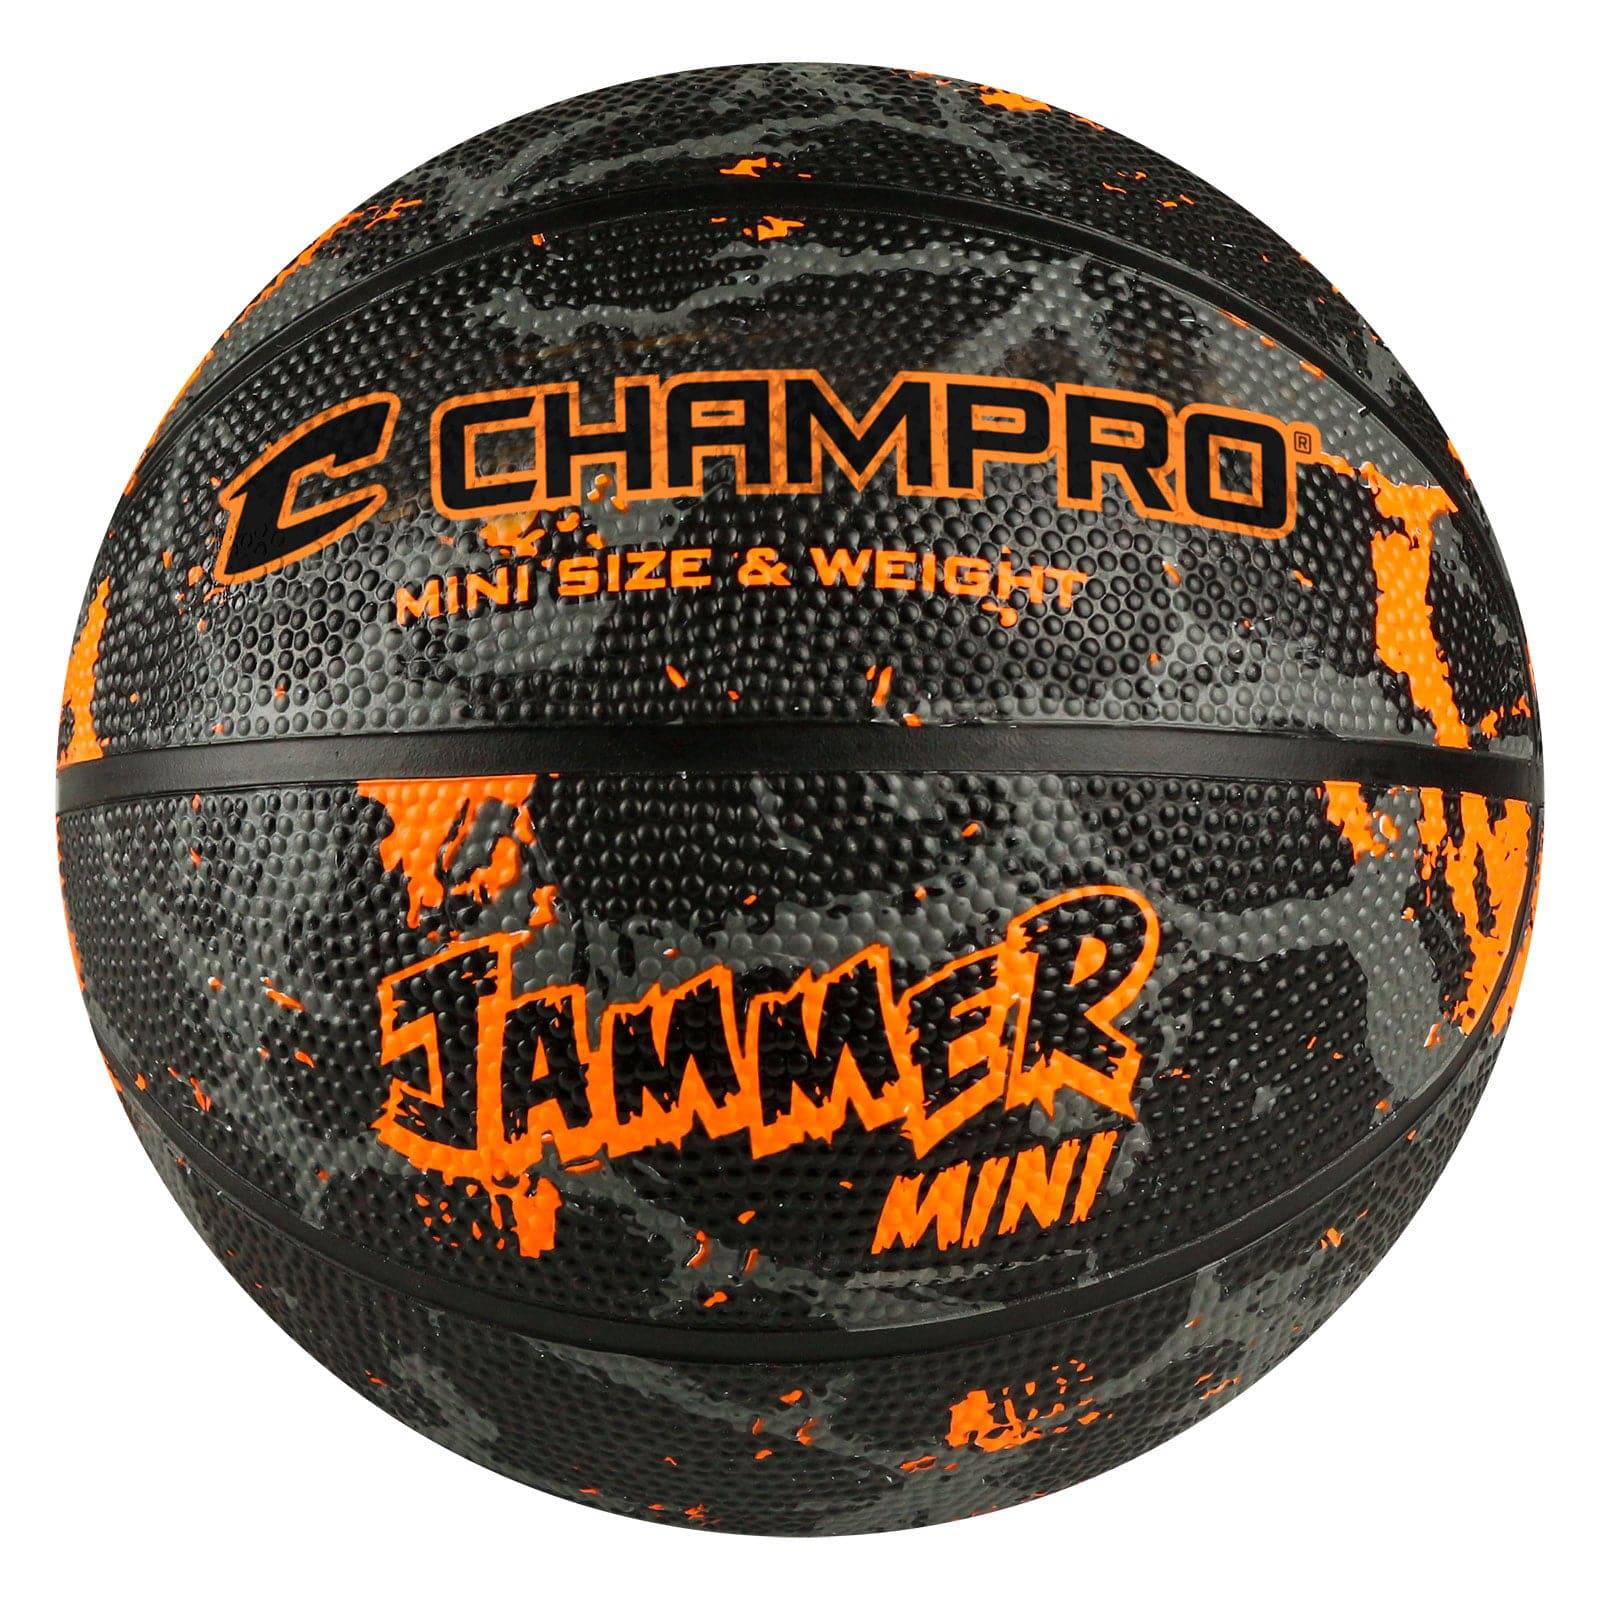 Champro Jammer B3 Sized Mini Rubber Basketballs